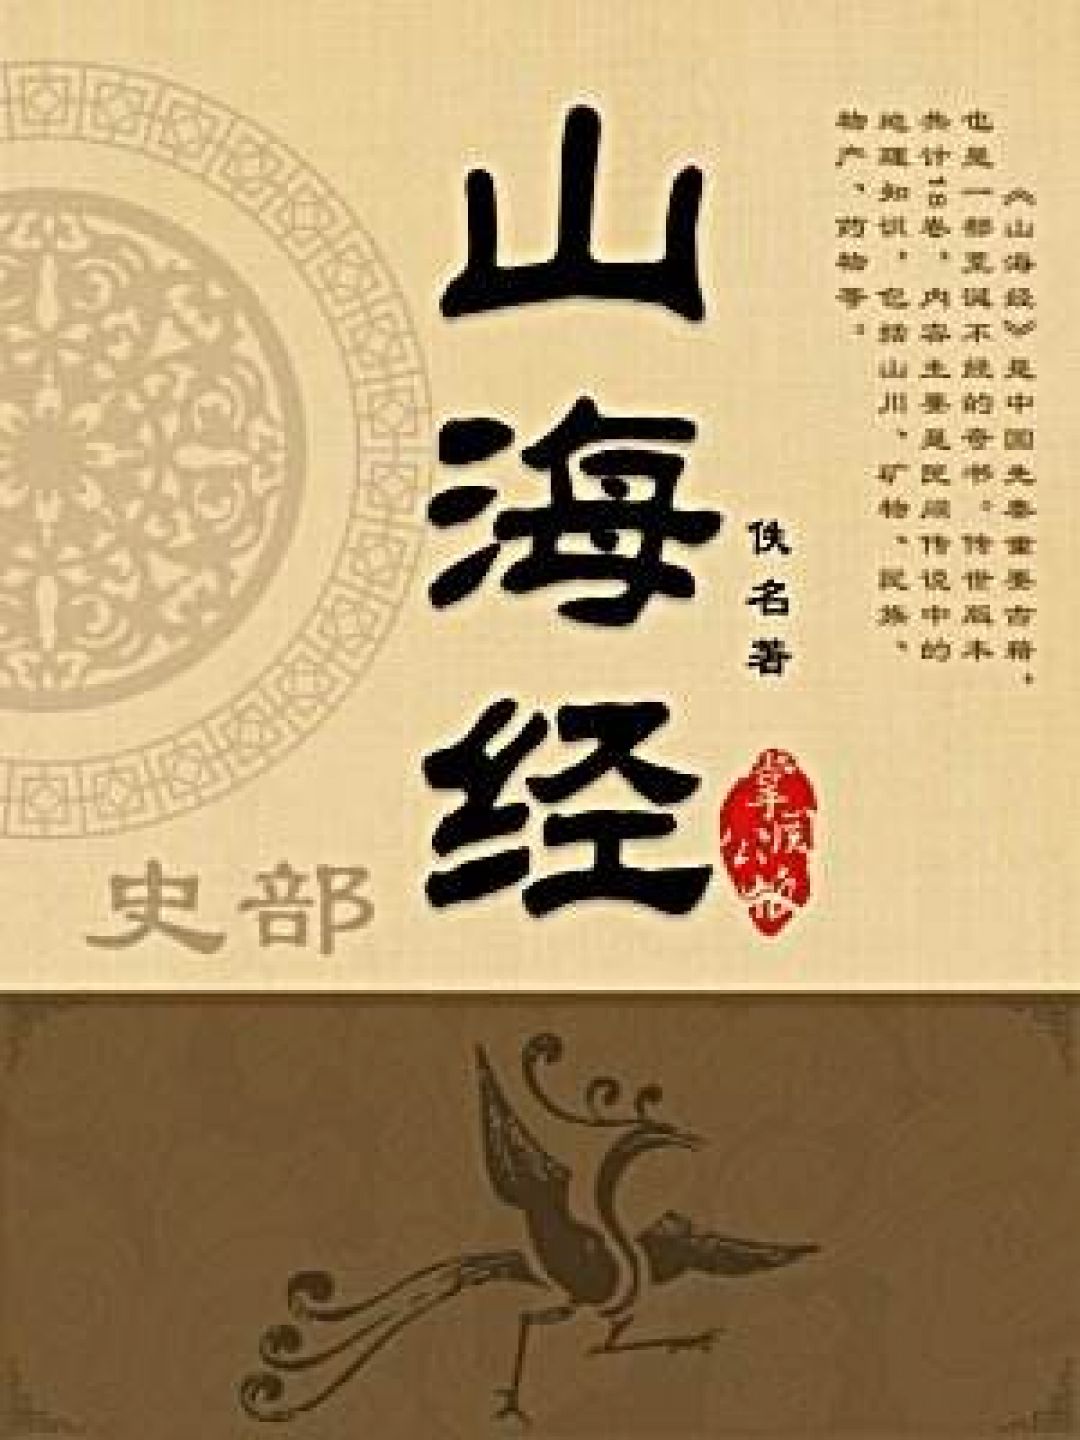 Mengenal Lebih Lanjut Kitab yang Berisi Mitologi China Shan Haijing (山海经)-Image-1